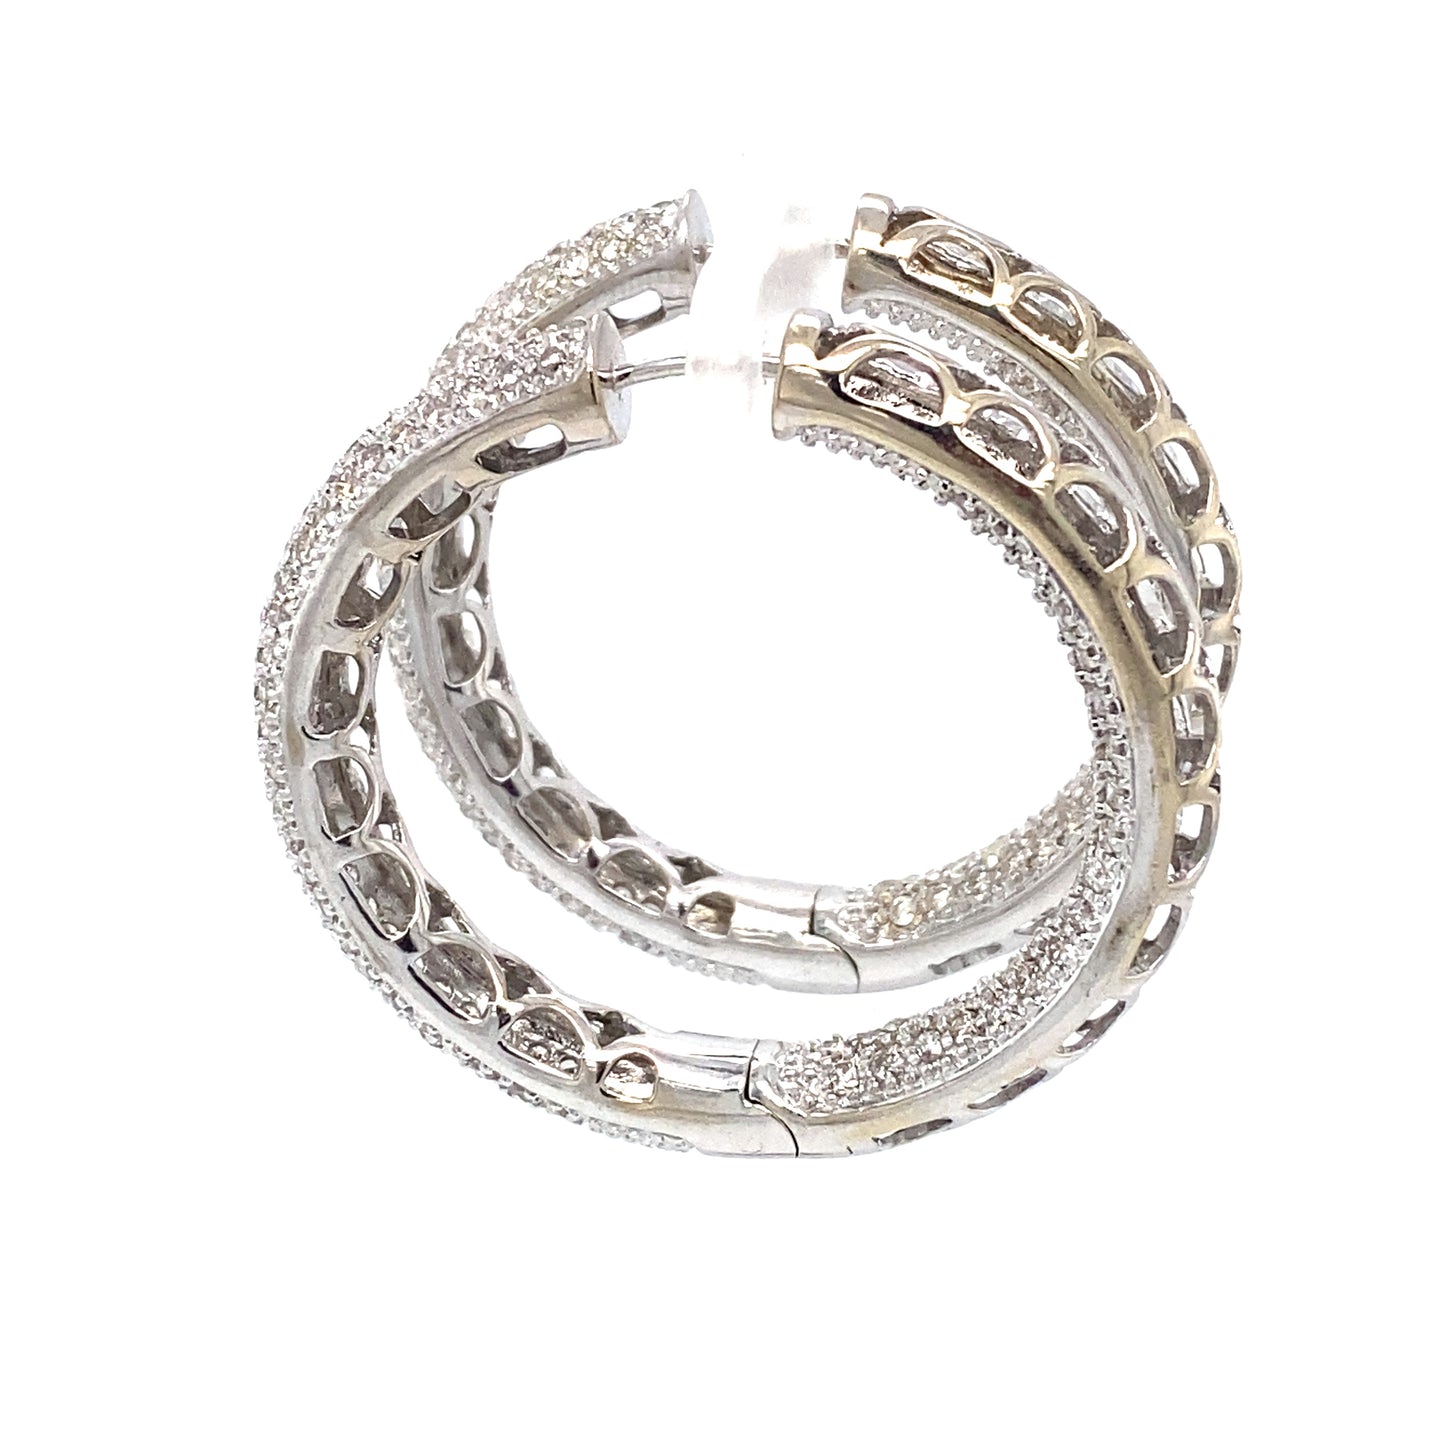 Circa 1990 Inside-Out Diamond Hoop Earrings in 18 Karat White Gold